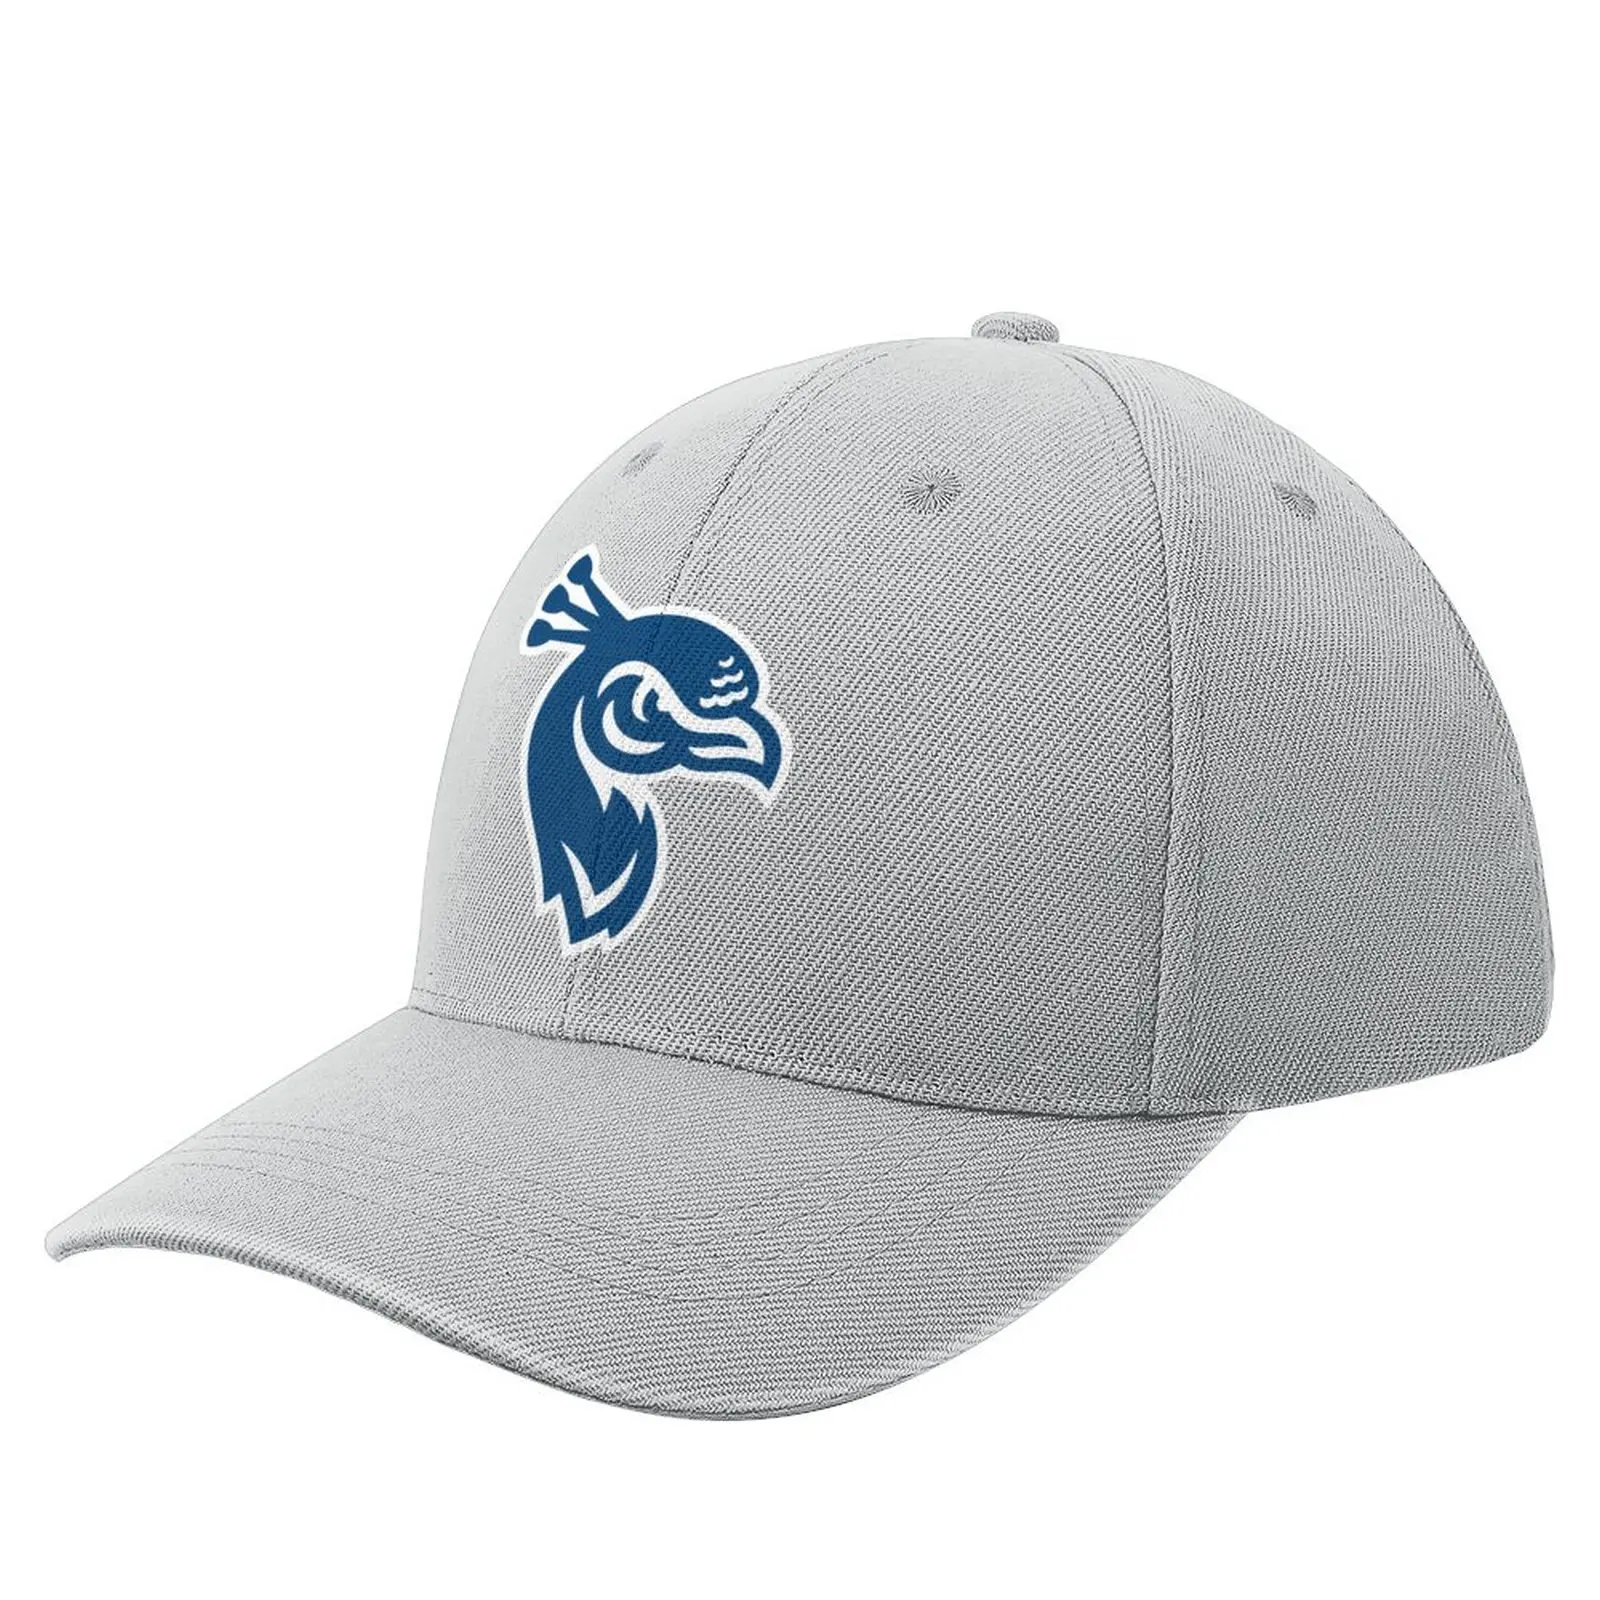 

Original Logo Saint Peter's Peacocks and Peahens Baseball Cap Hip Hop summer hats Caps For Men Women'S